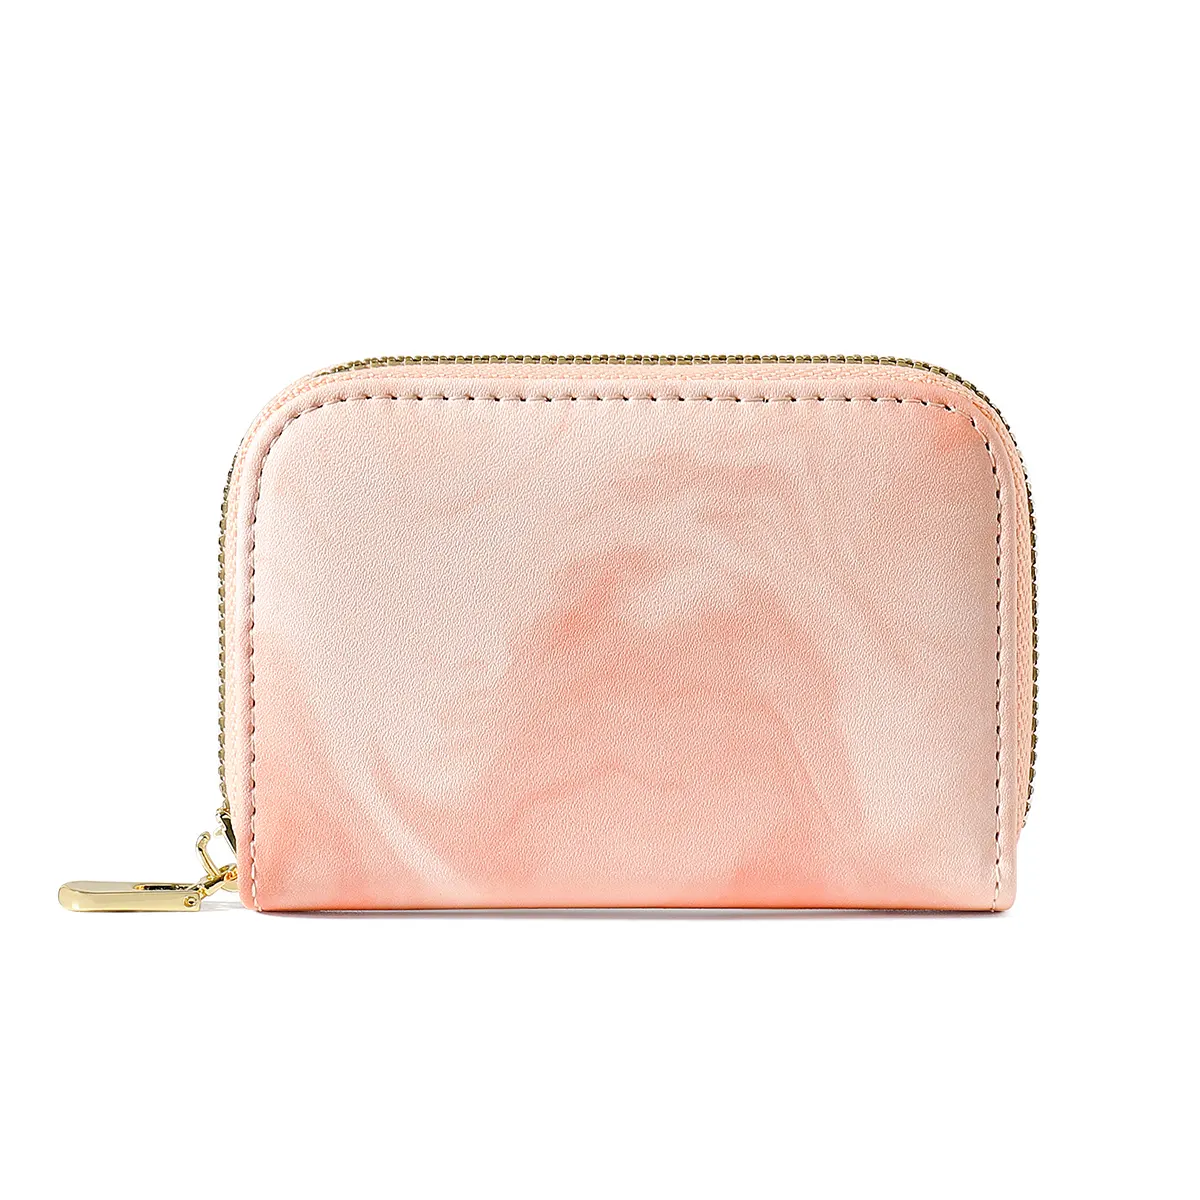 TAOMICMIC fashion id card holder wallet women short wallet zipper coin purse